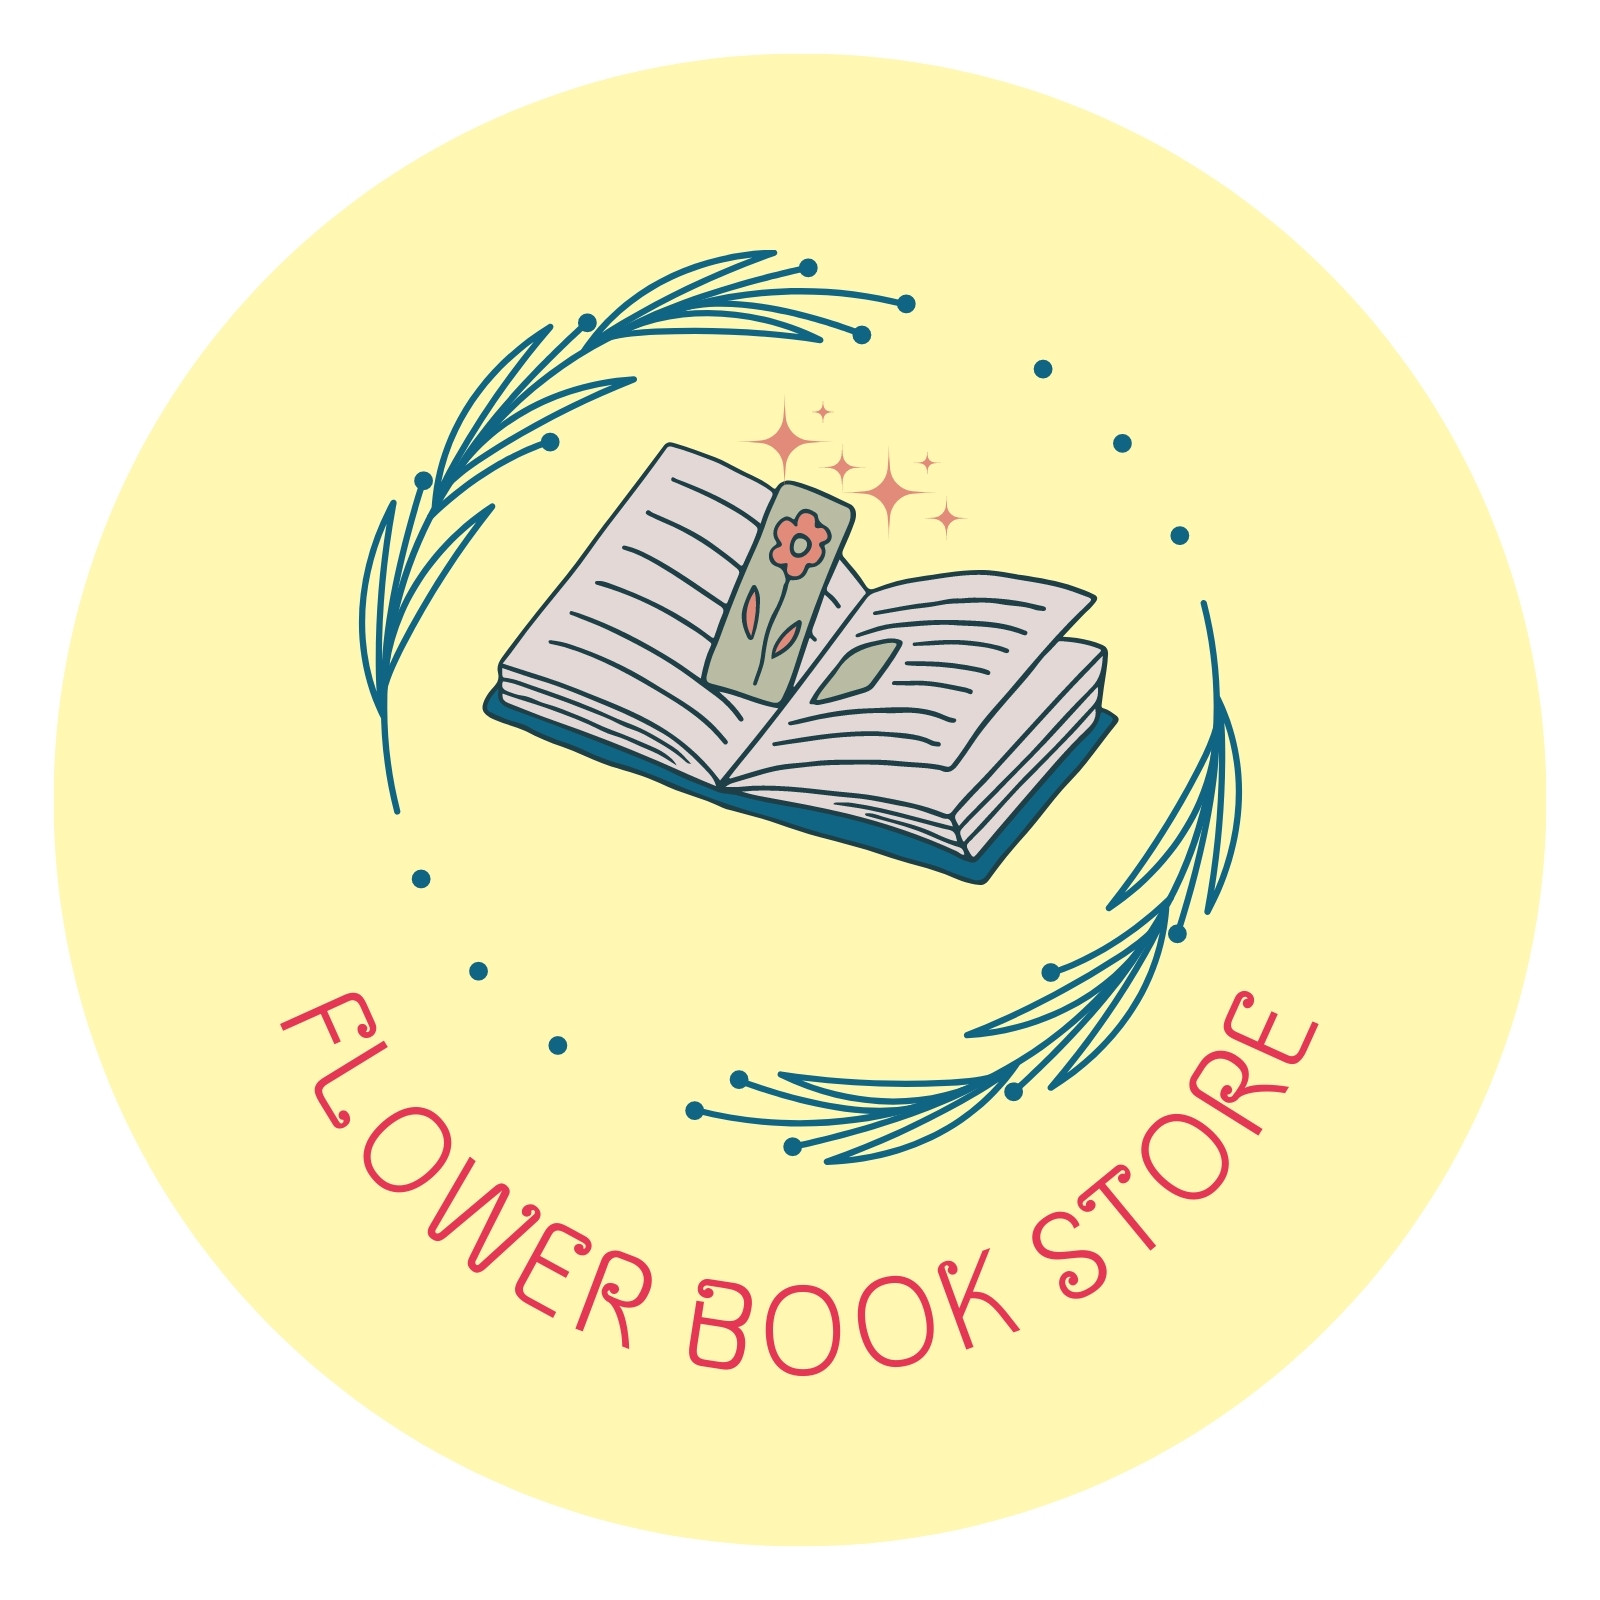 Download free royalty-free bookshop logos at rawpixel.com | Web design  resources, Logo set, Creative banners